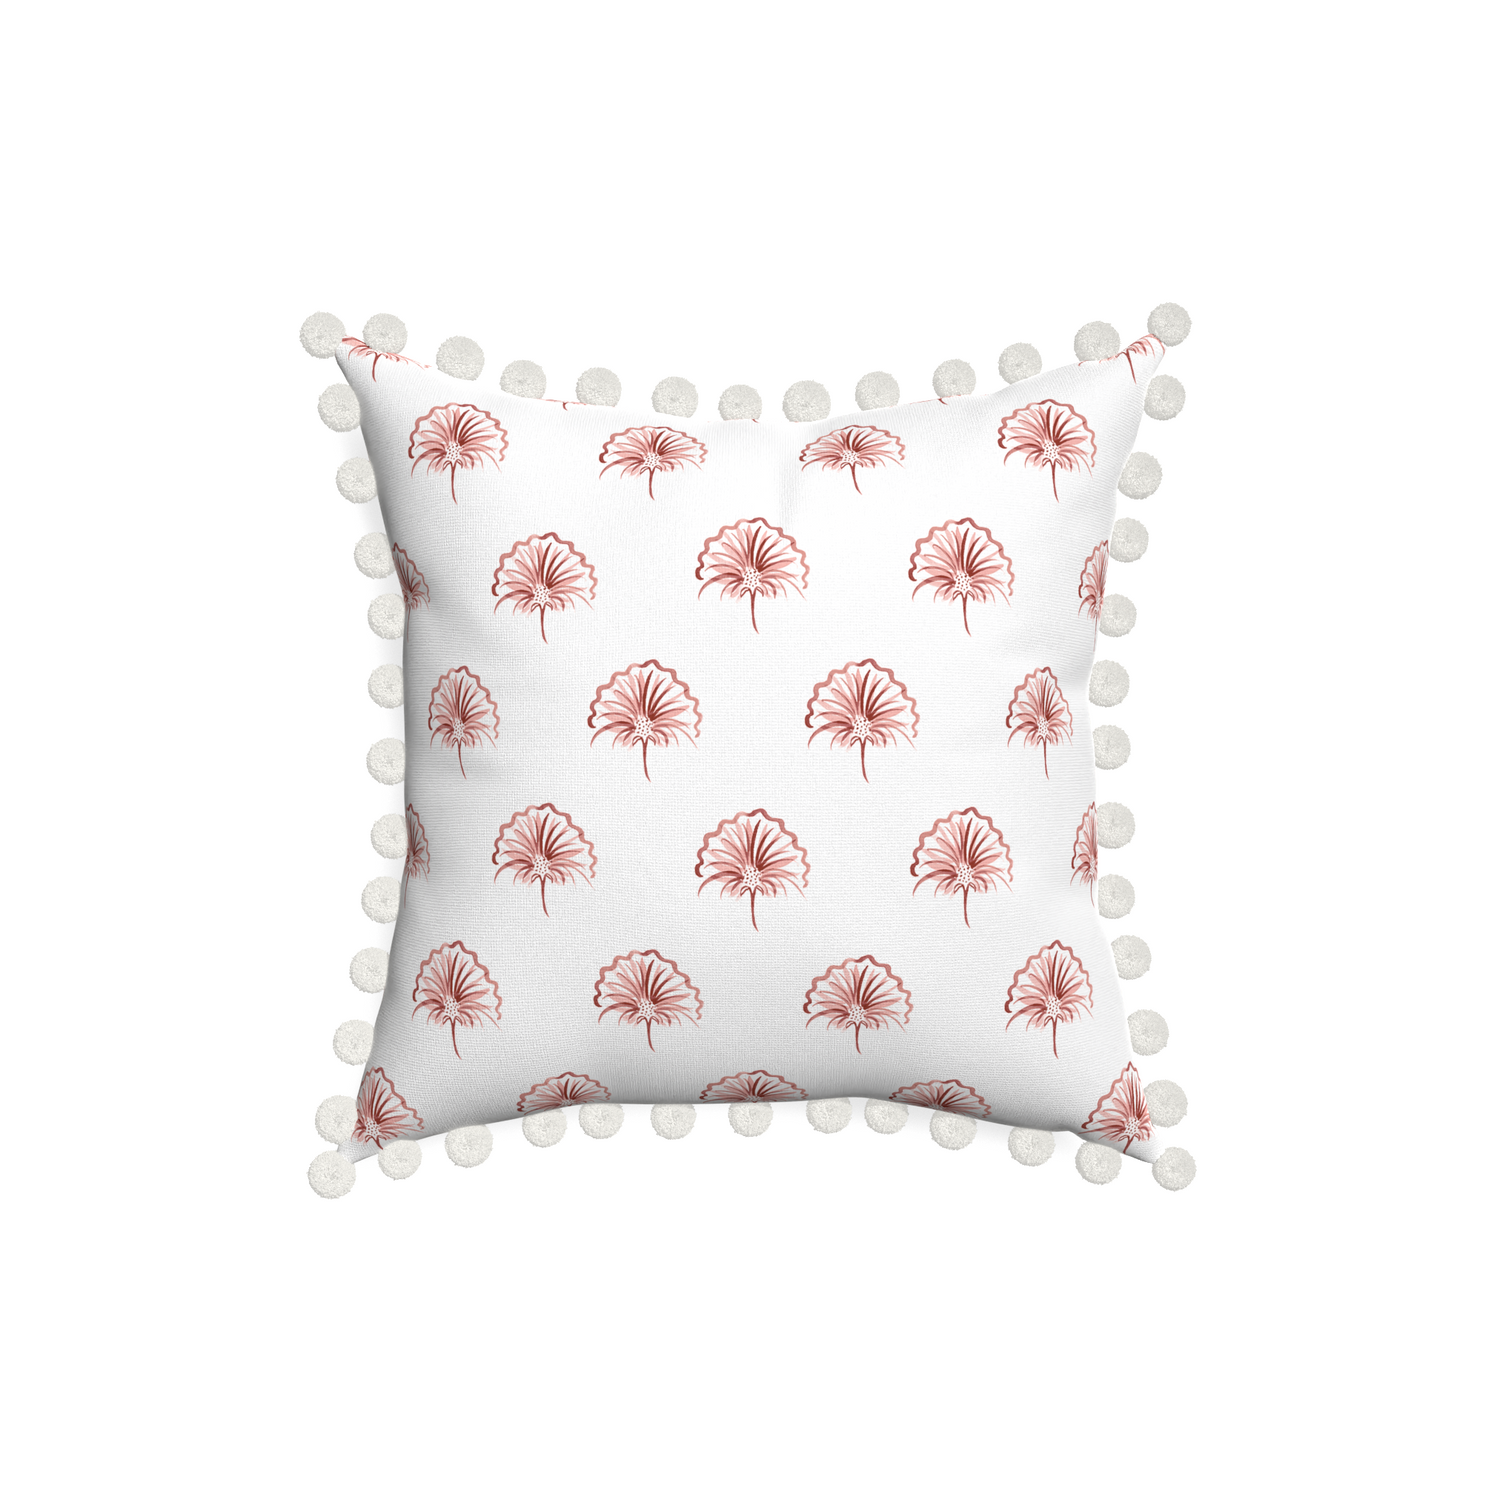 18-square penelope rose custom pillow with snow pom pom on white background